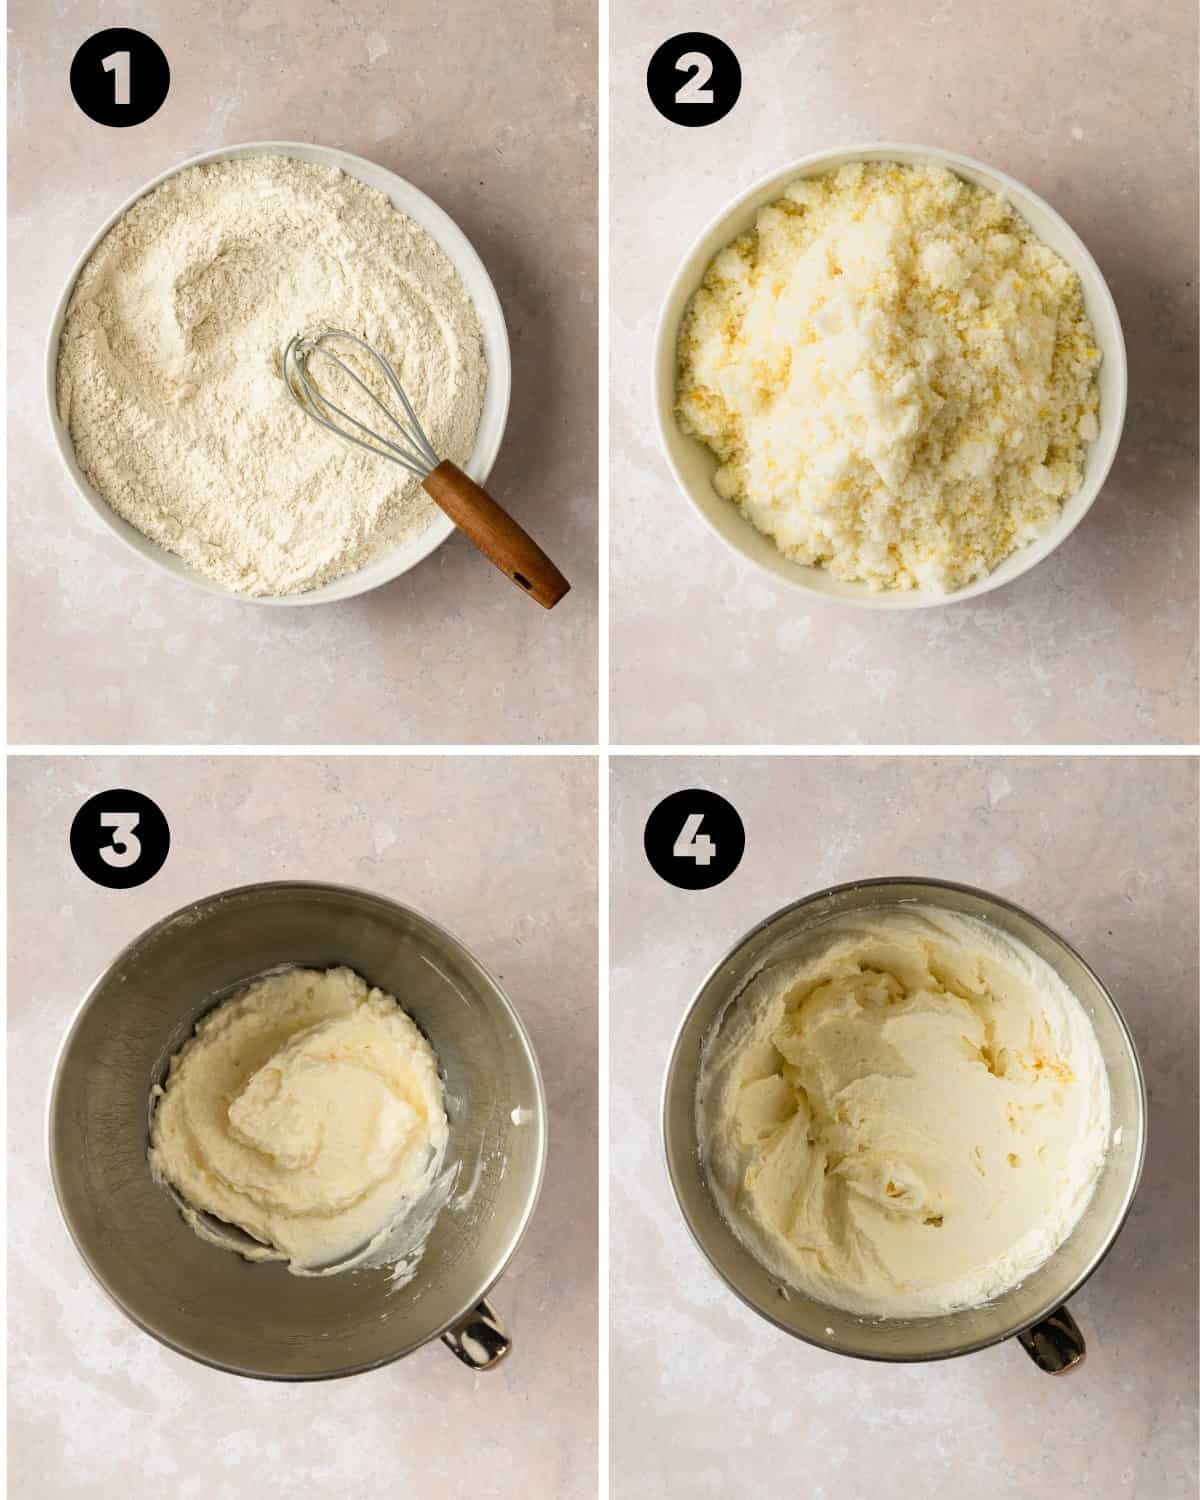 Lemon Bundt Cake Recipe Recipe Steps 1-4